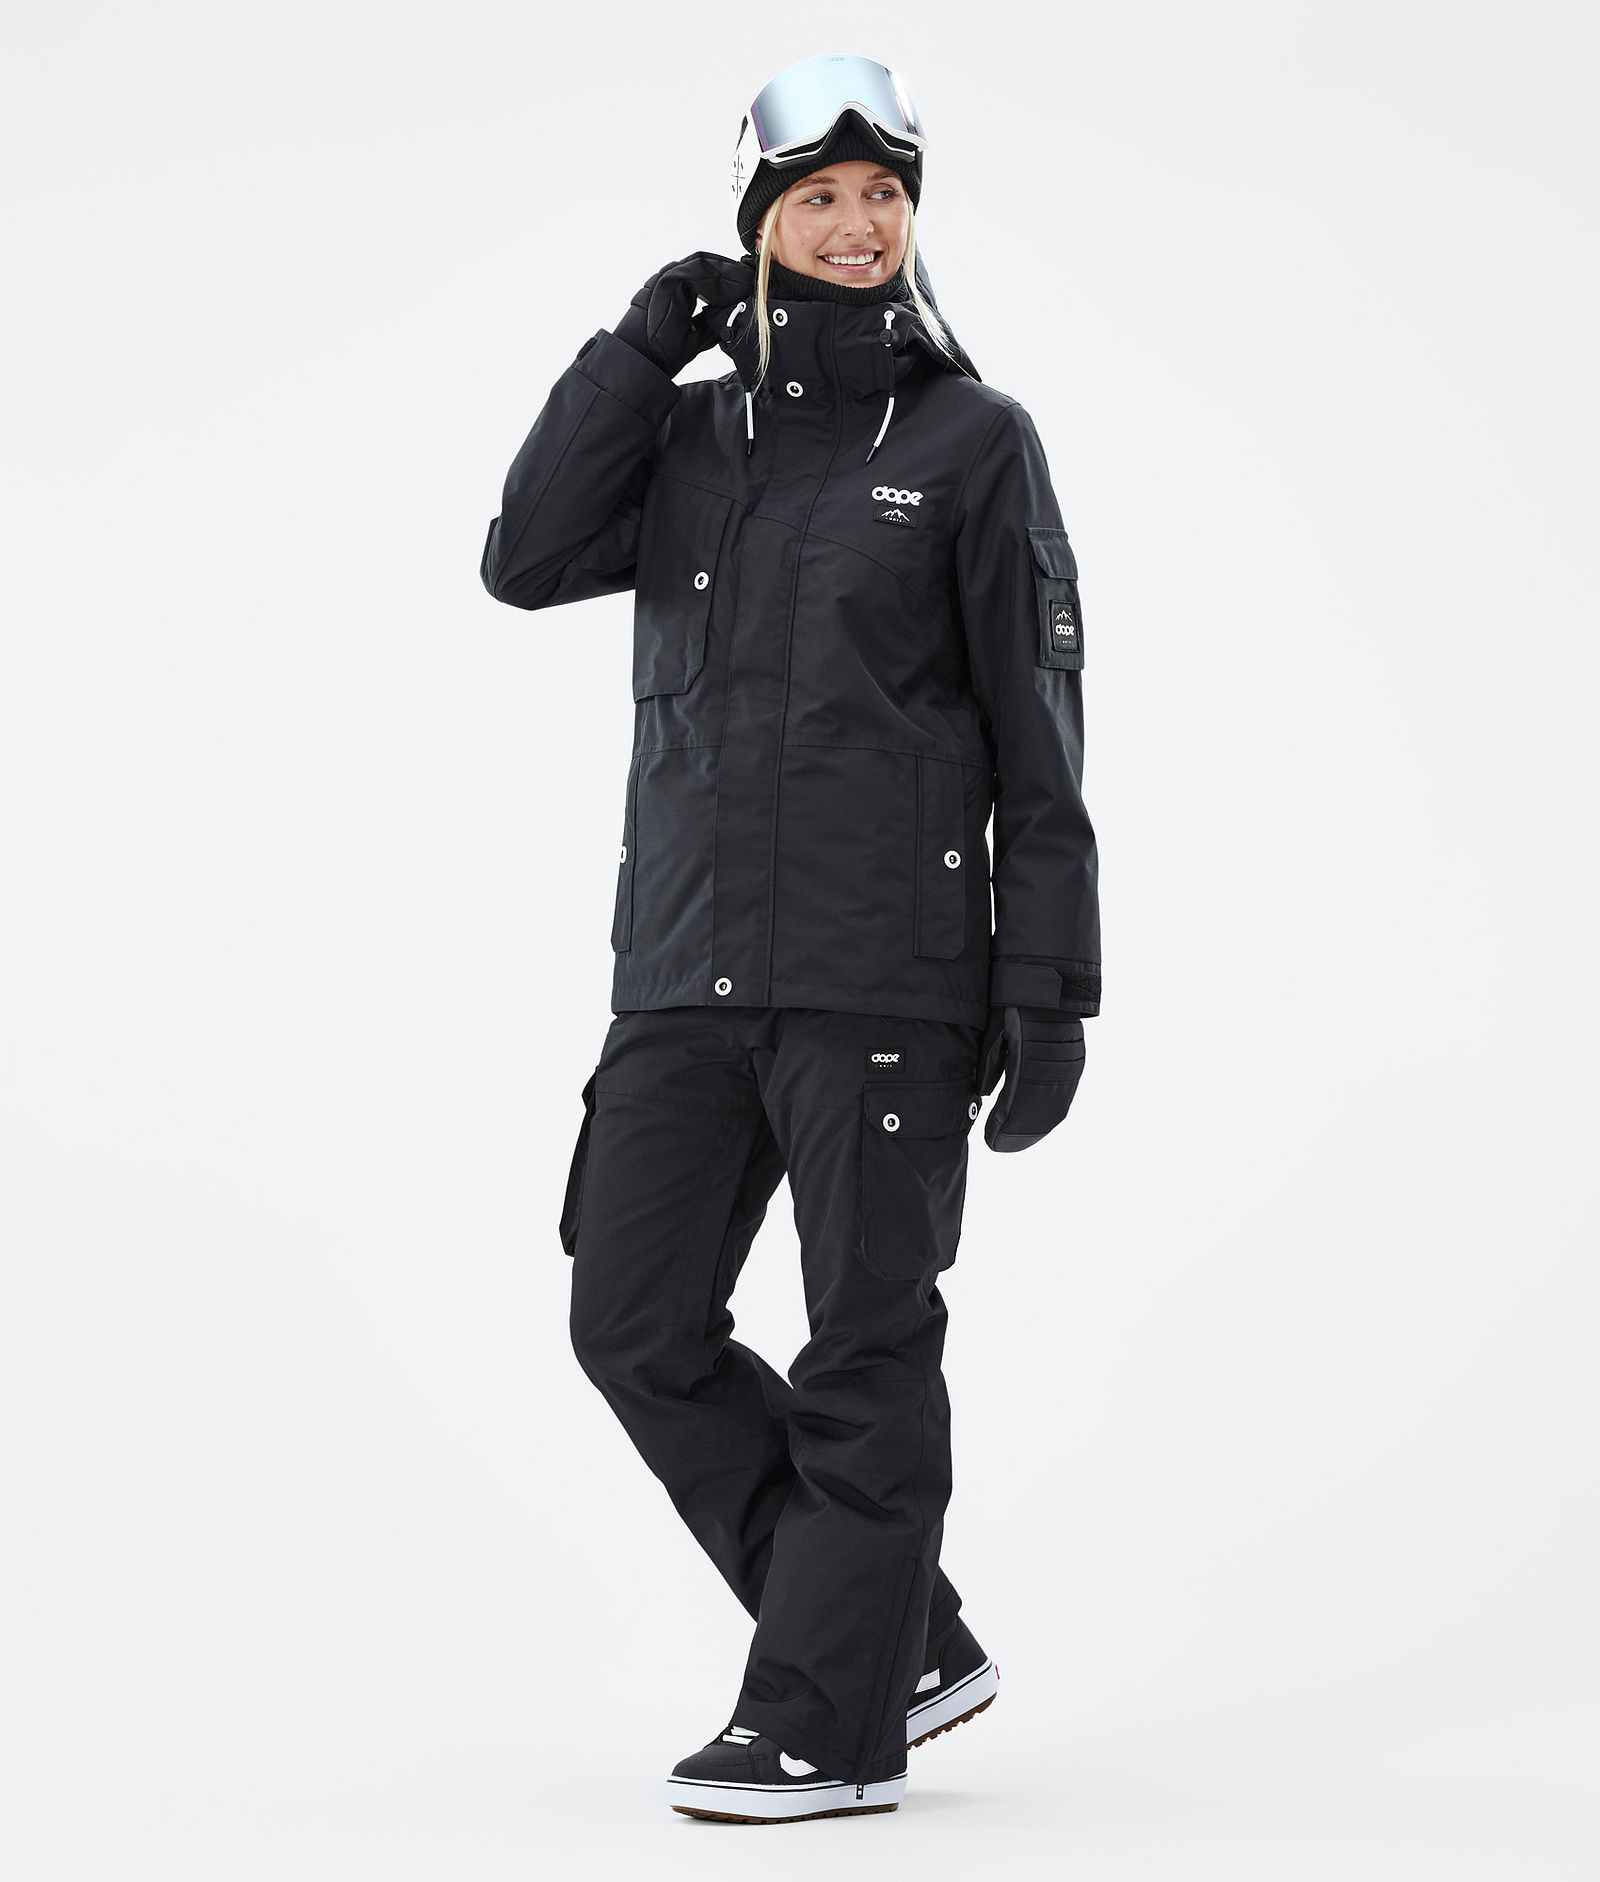 Iconic W Pantalon de Snowboard Femme Black